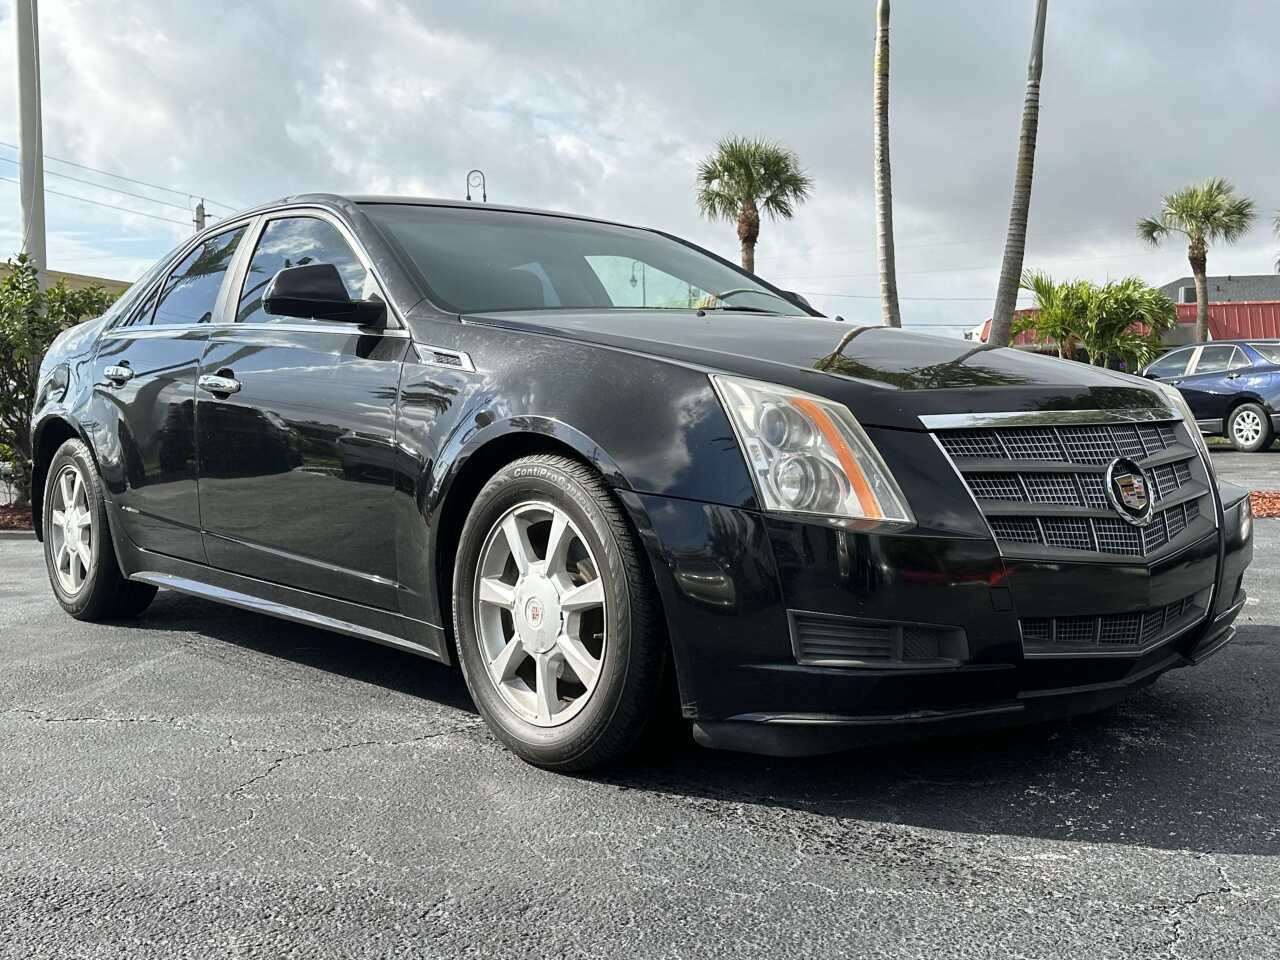 2011 Cadillac CTS Sedan - $8,500